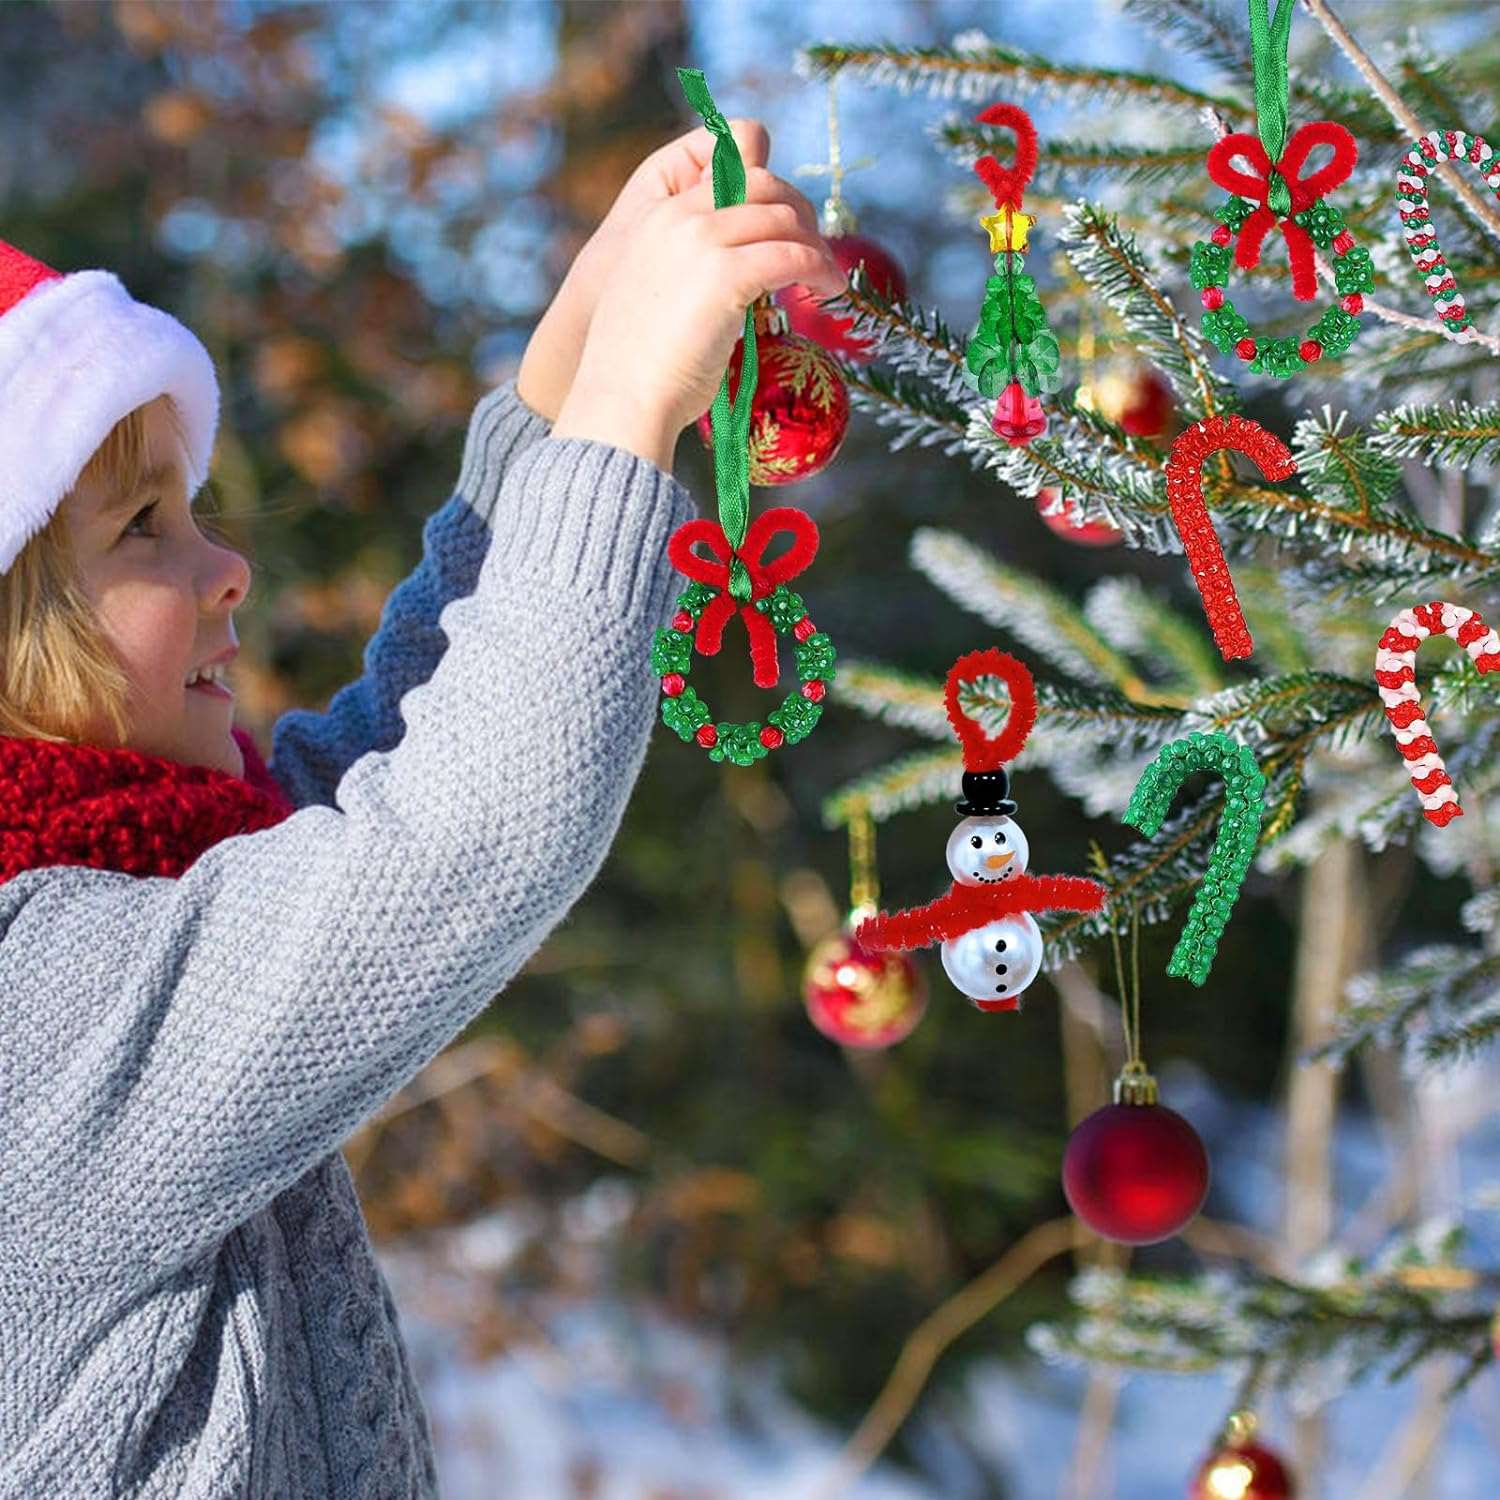 32 Sets Christmas Beaded Ornament Kits Including 8Pcs Snowman,8Pcs Wreath,8Pcs Xmas Tree